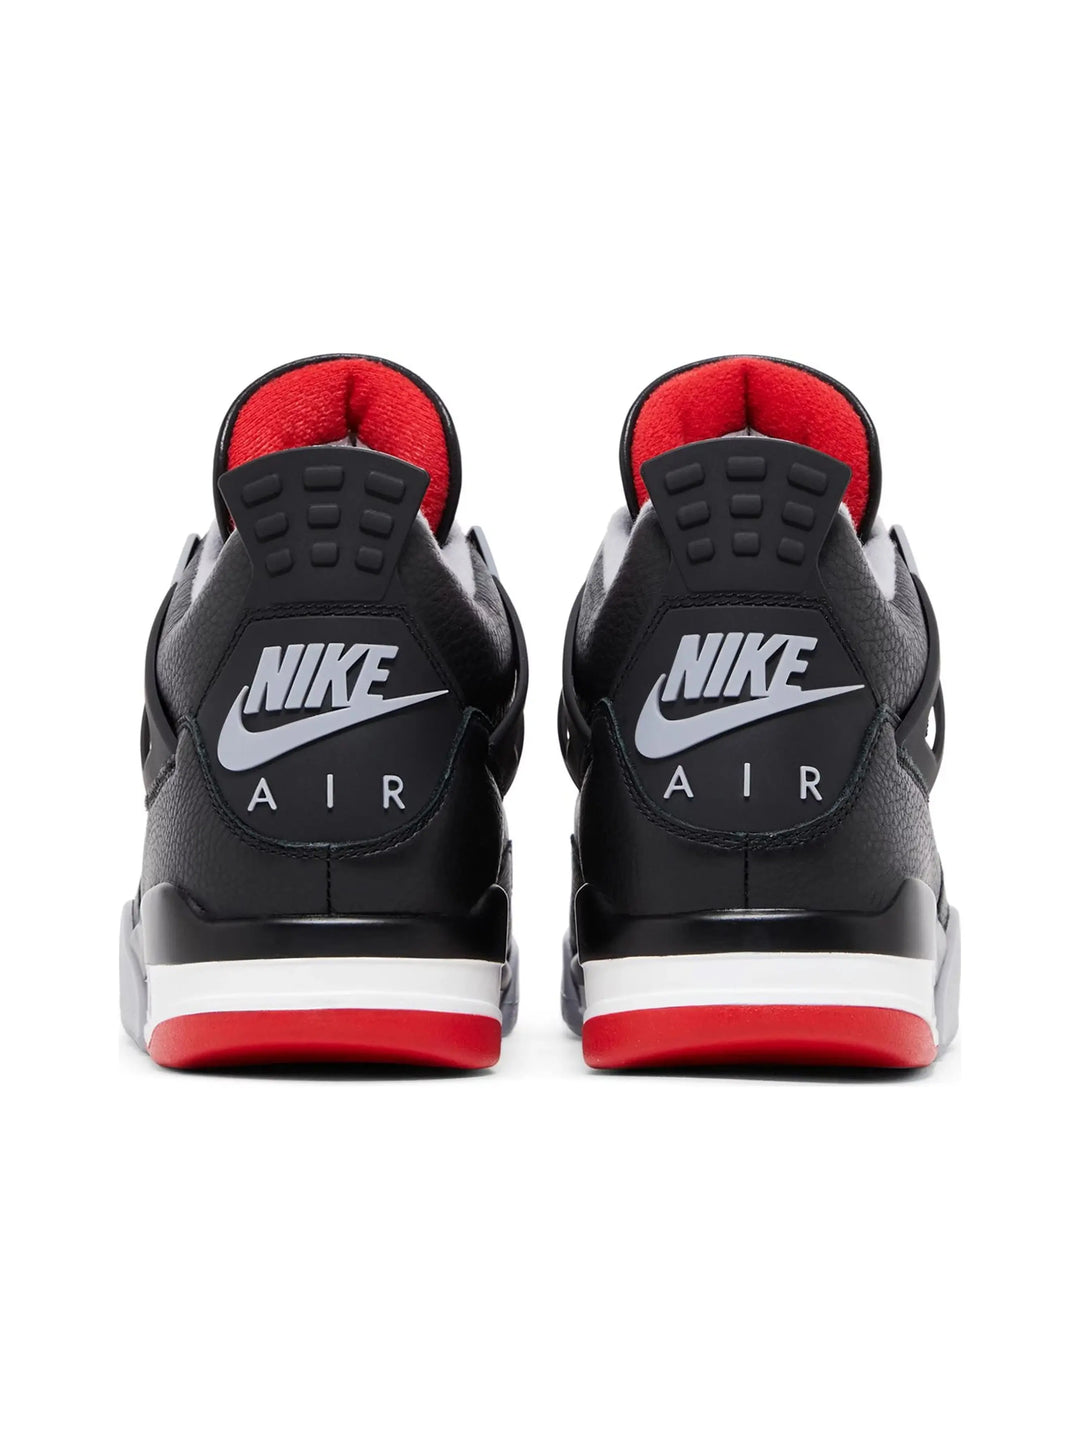 Nike Air Jordan 4 Retro Bred Reimagined in Auckland, New Zealand - Shop name